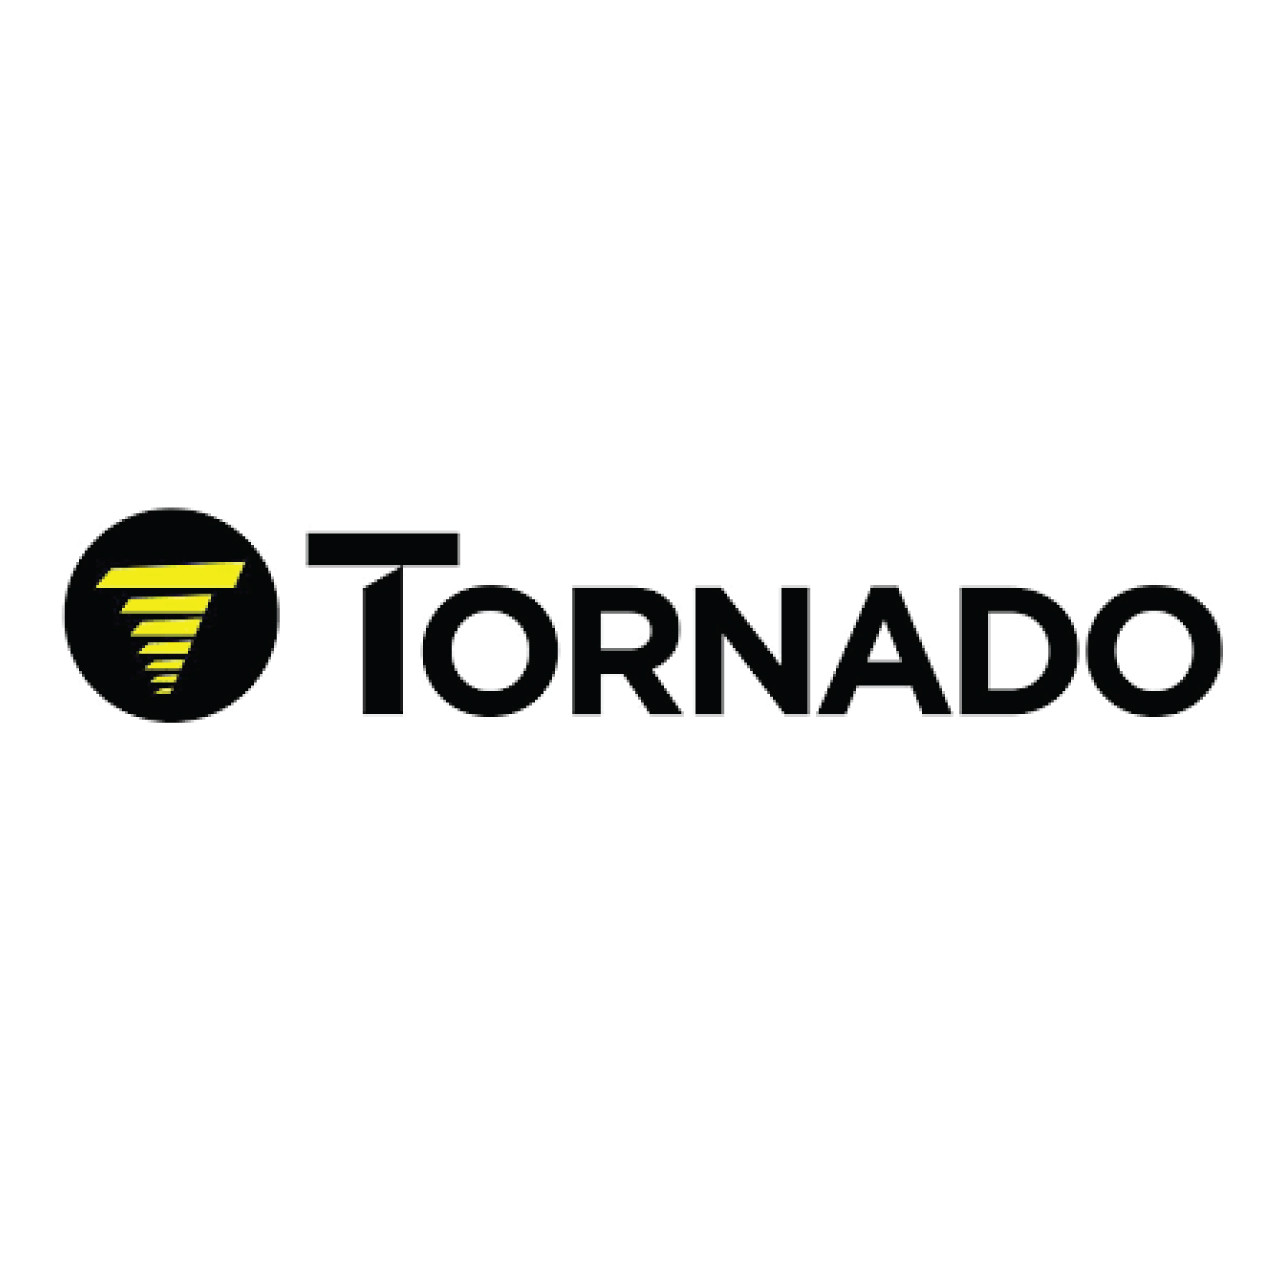 02-3708-0000, Tornado 02-3708-0000, Tornado STRAIN RELIEF P CLIP 1.5 DIA BLACK 12MM LONG, Tornado parts